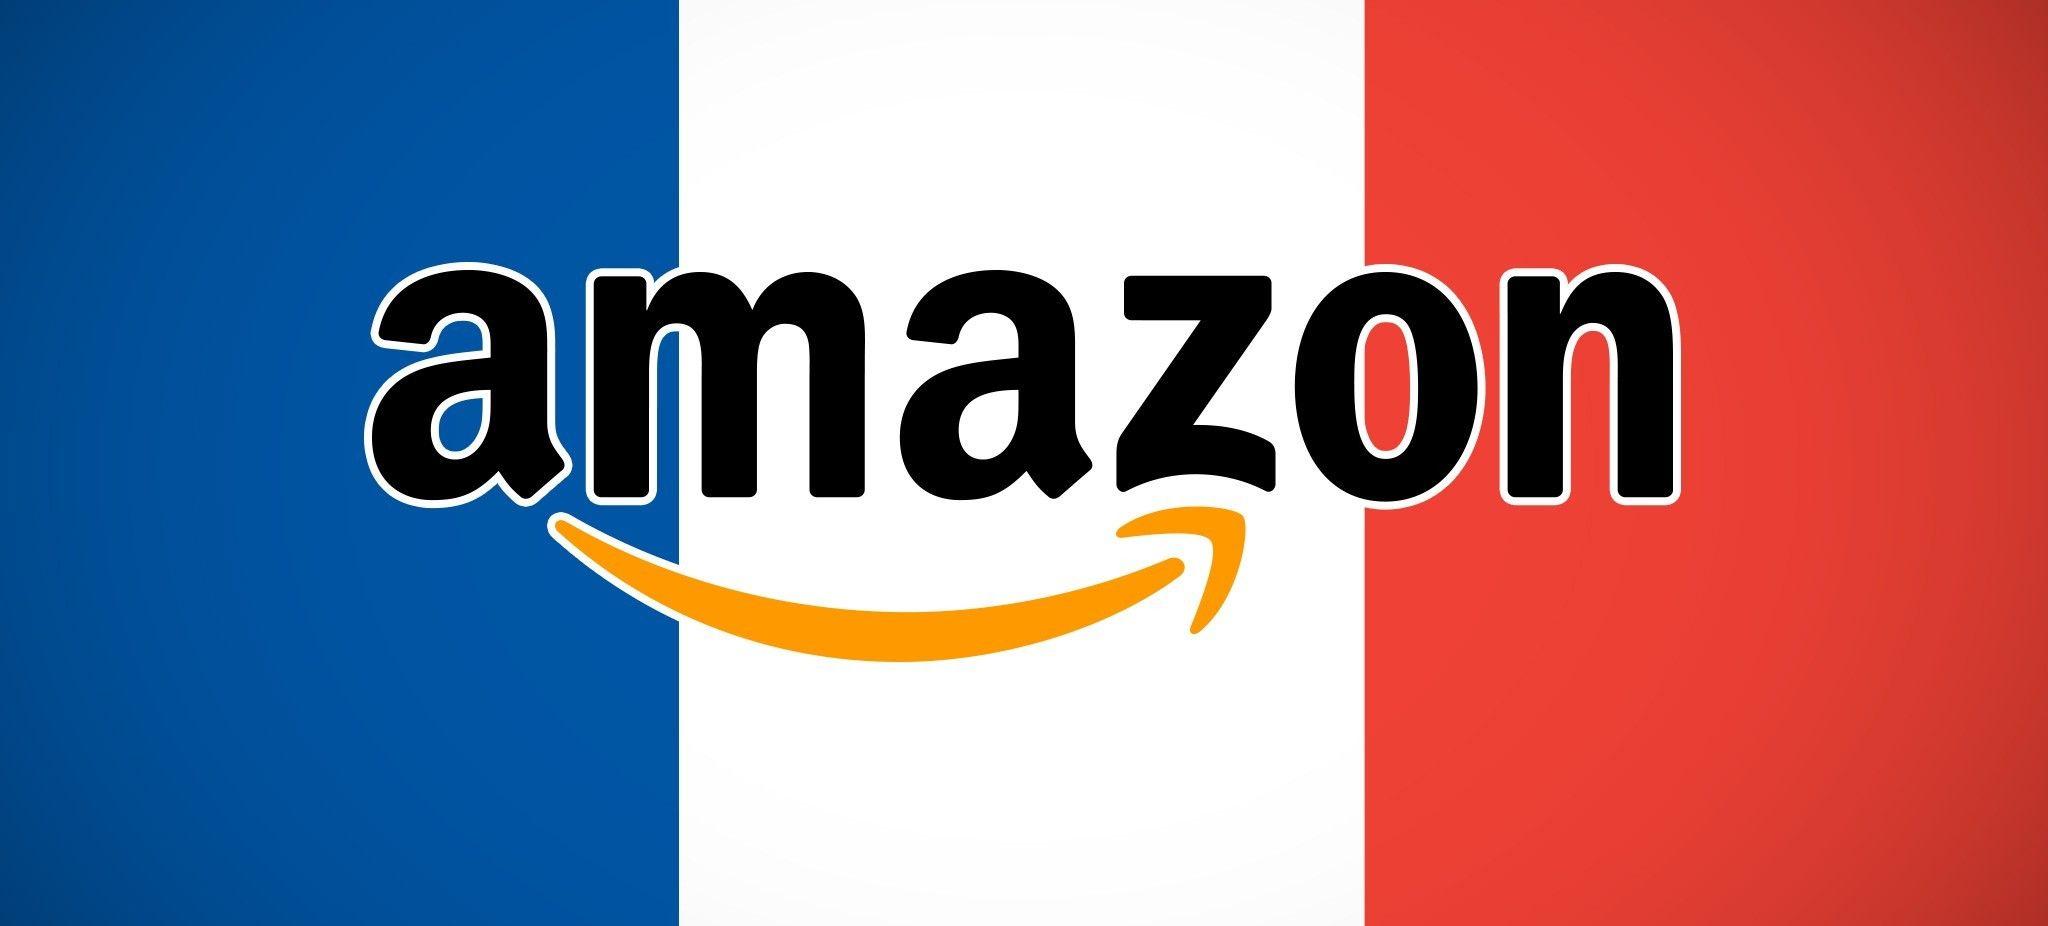 Amazon.fr Logo - Amazon UK Reviews in Amazon France - Online Seller UK